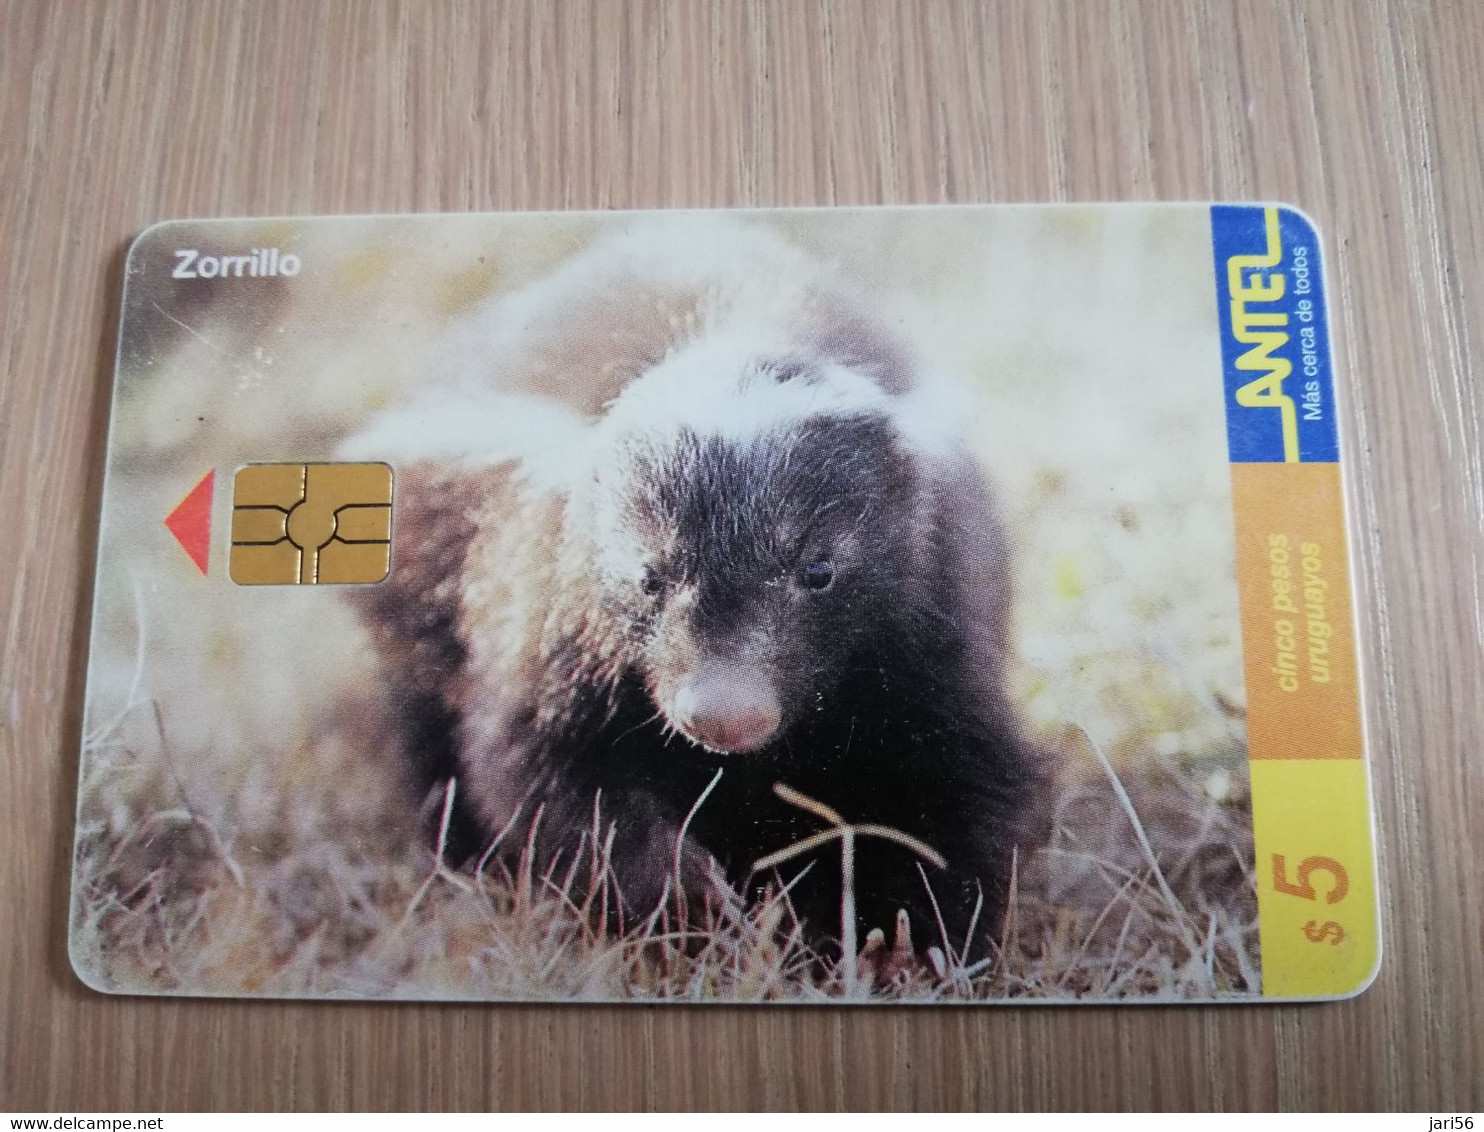 URUGUAY CHIPCARD  ANIMAL    $5  ZORILLO            Nice Used Card    **4548** - Uruguay